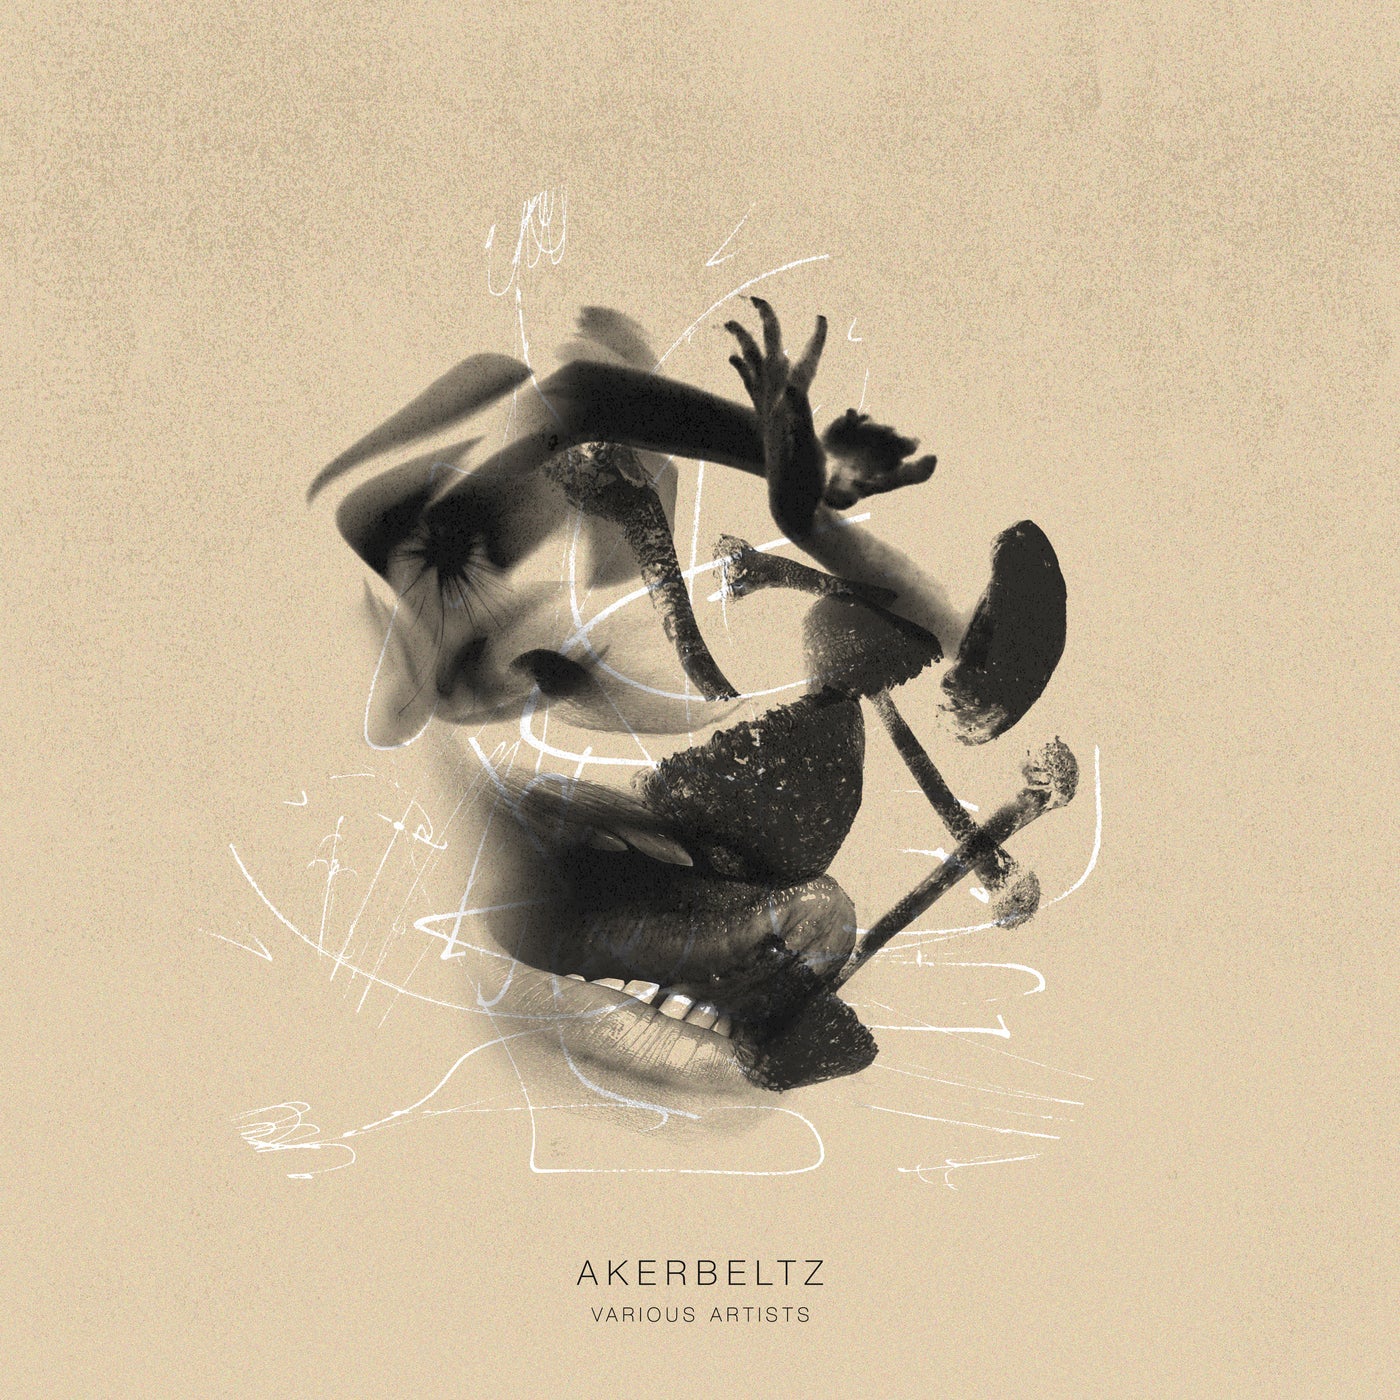 Download Akerbeltz on Electrobuzz